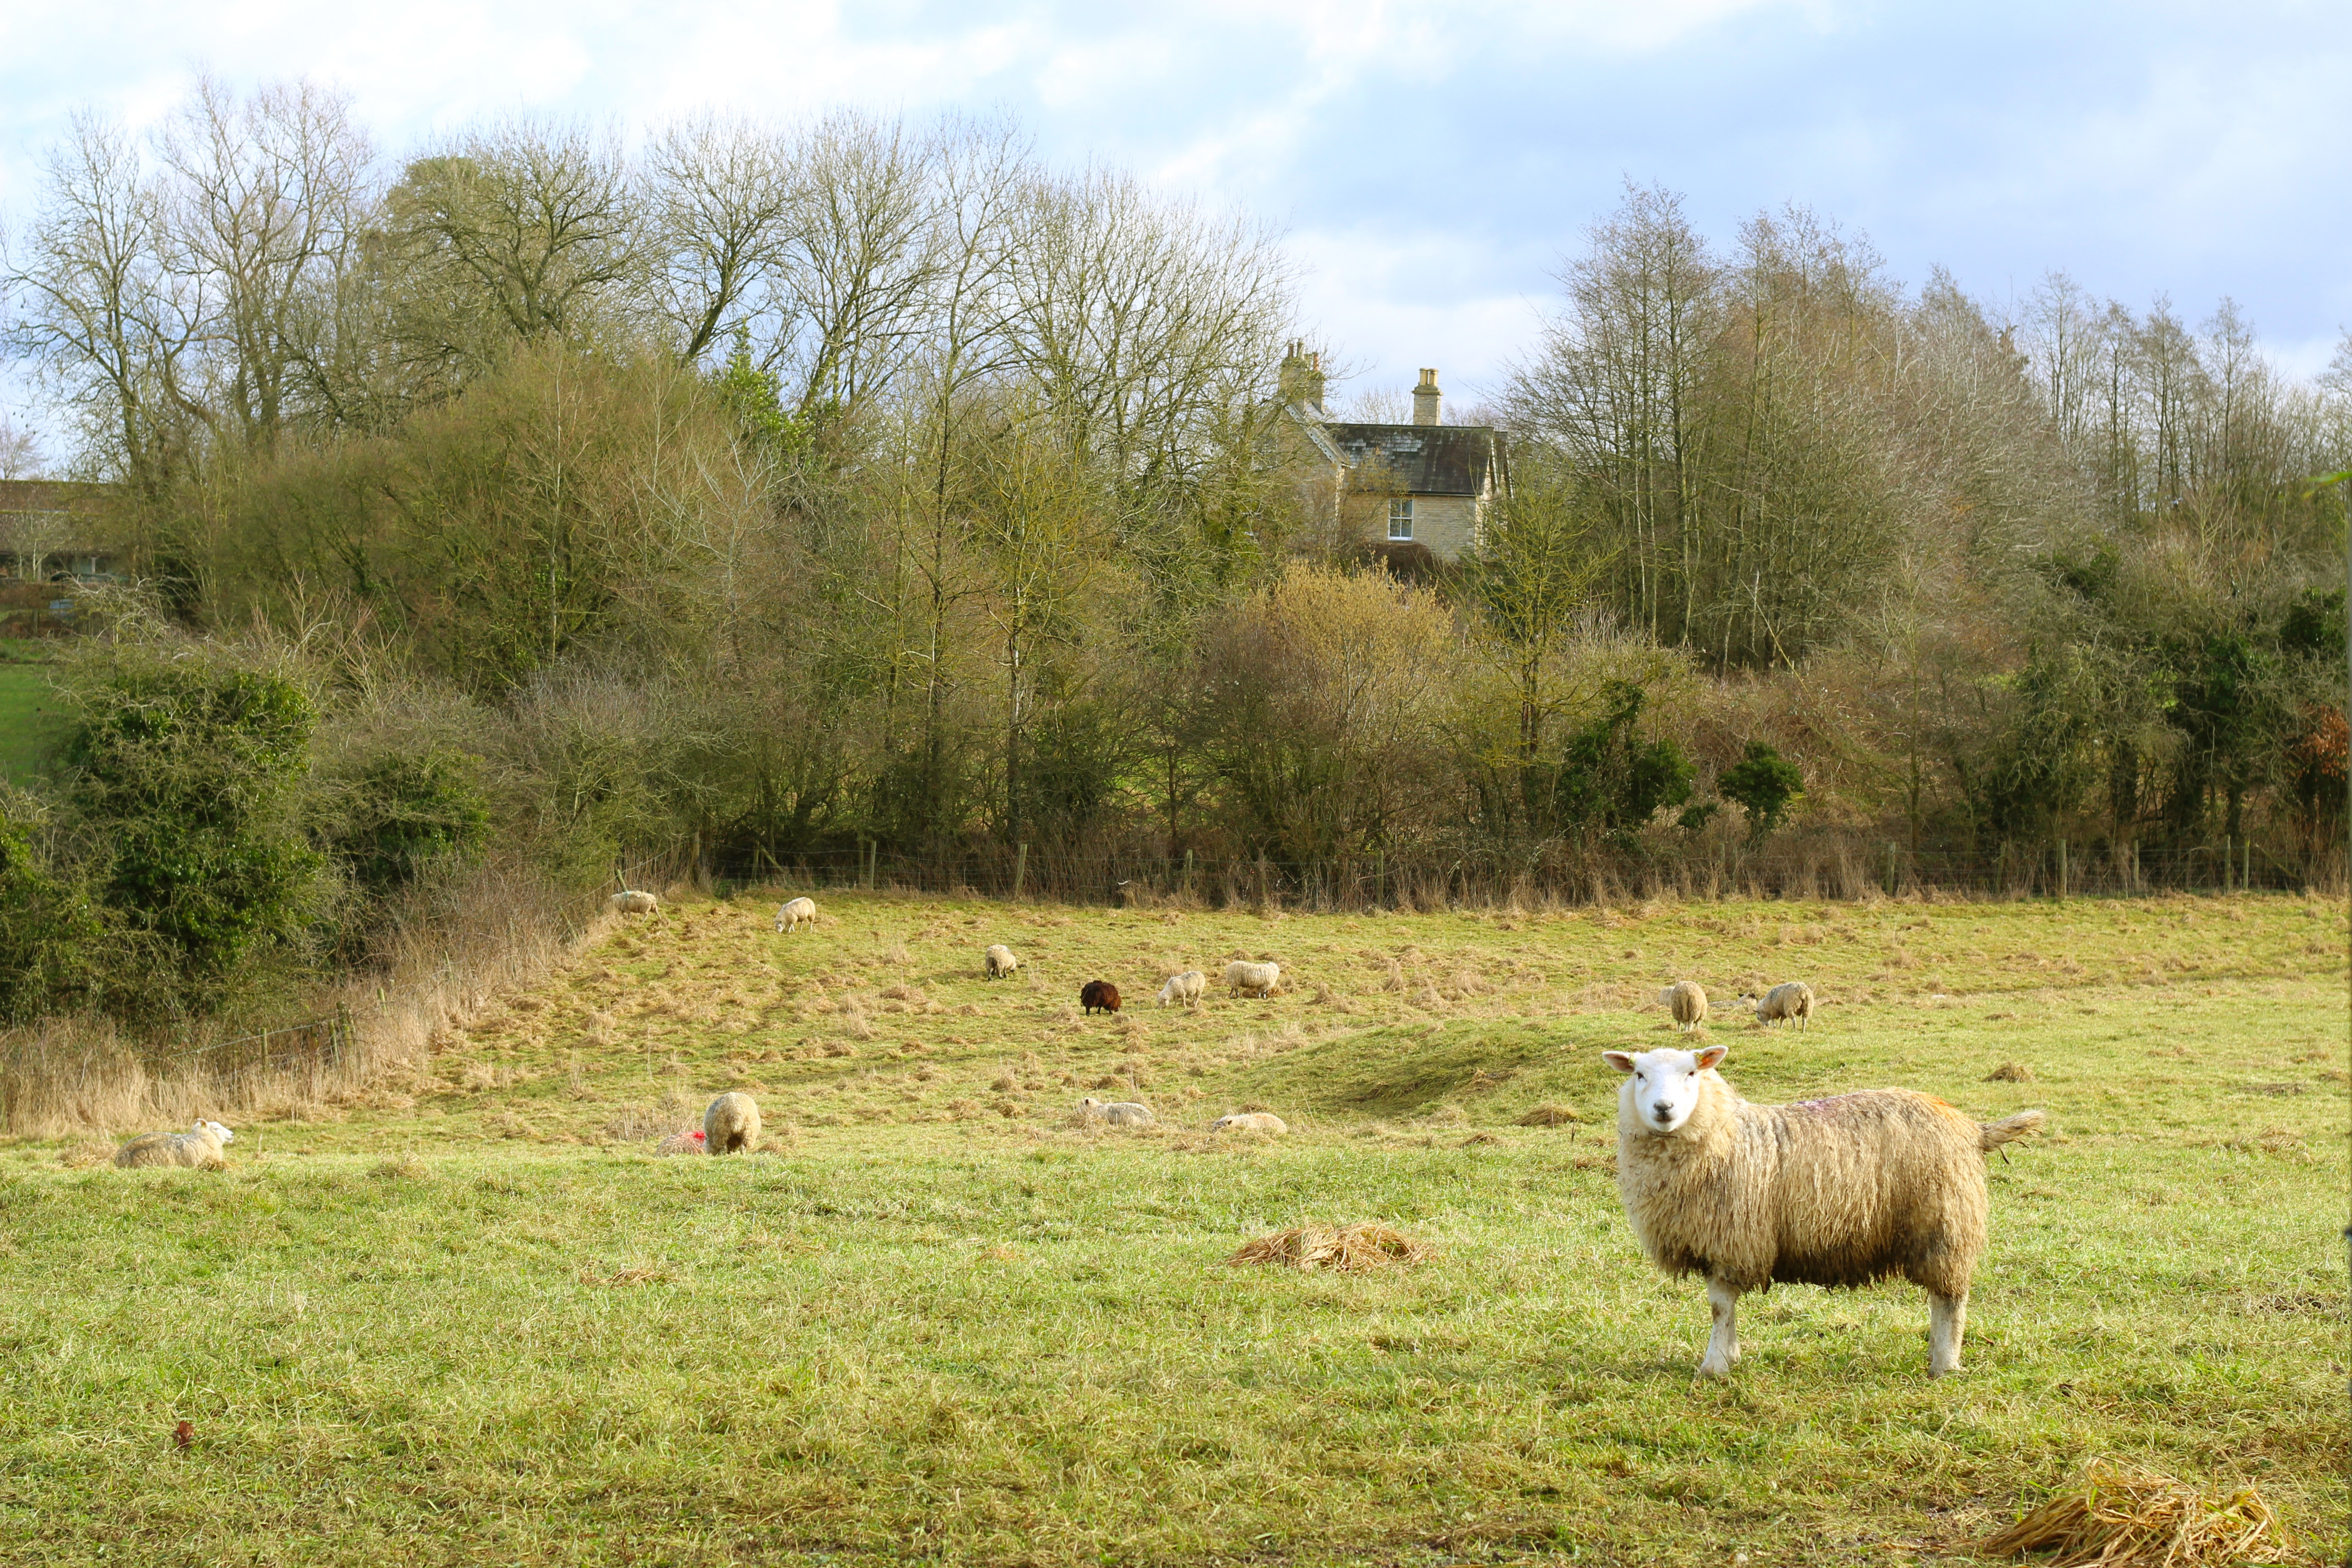 Sheep on grass field photo